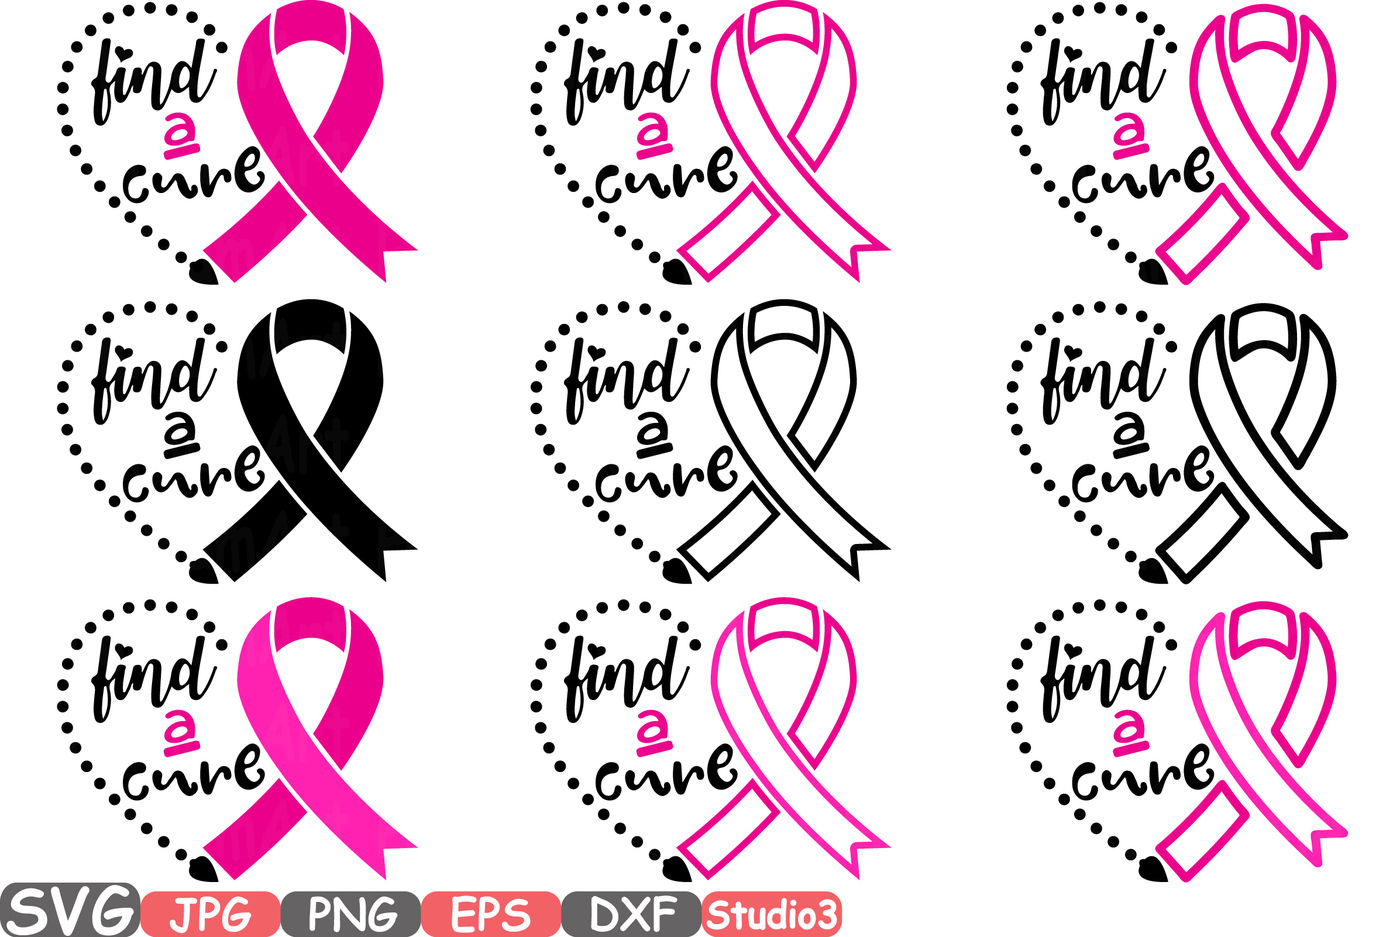 Download Breast Cancer Ribbon Monogram Silhouette Svg Cutting Files Digital Clip Art Graphic Studio3 Cricut Cuttable Die Cut Machines Find A Cure 59sv By Hamhamart Thehungryjpeg Com